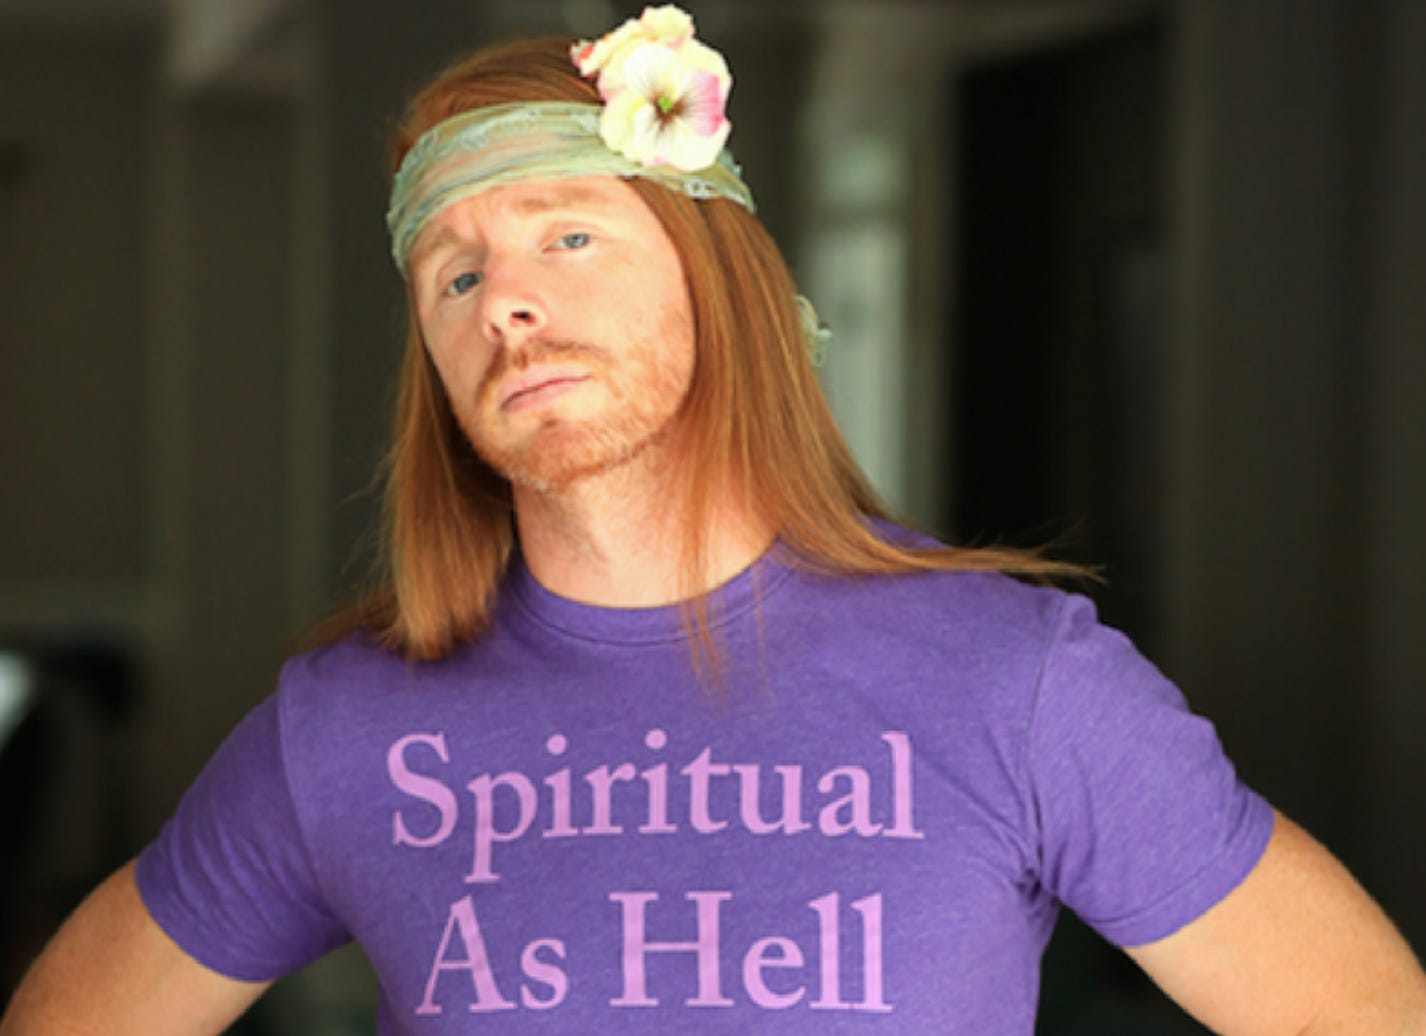 Very annoying man in a spiritual as hell tee shirt